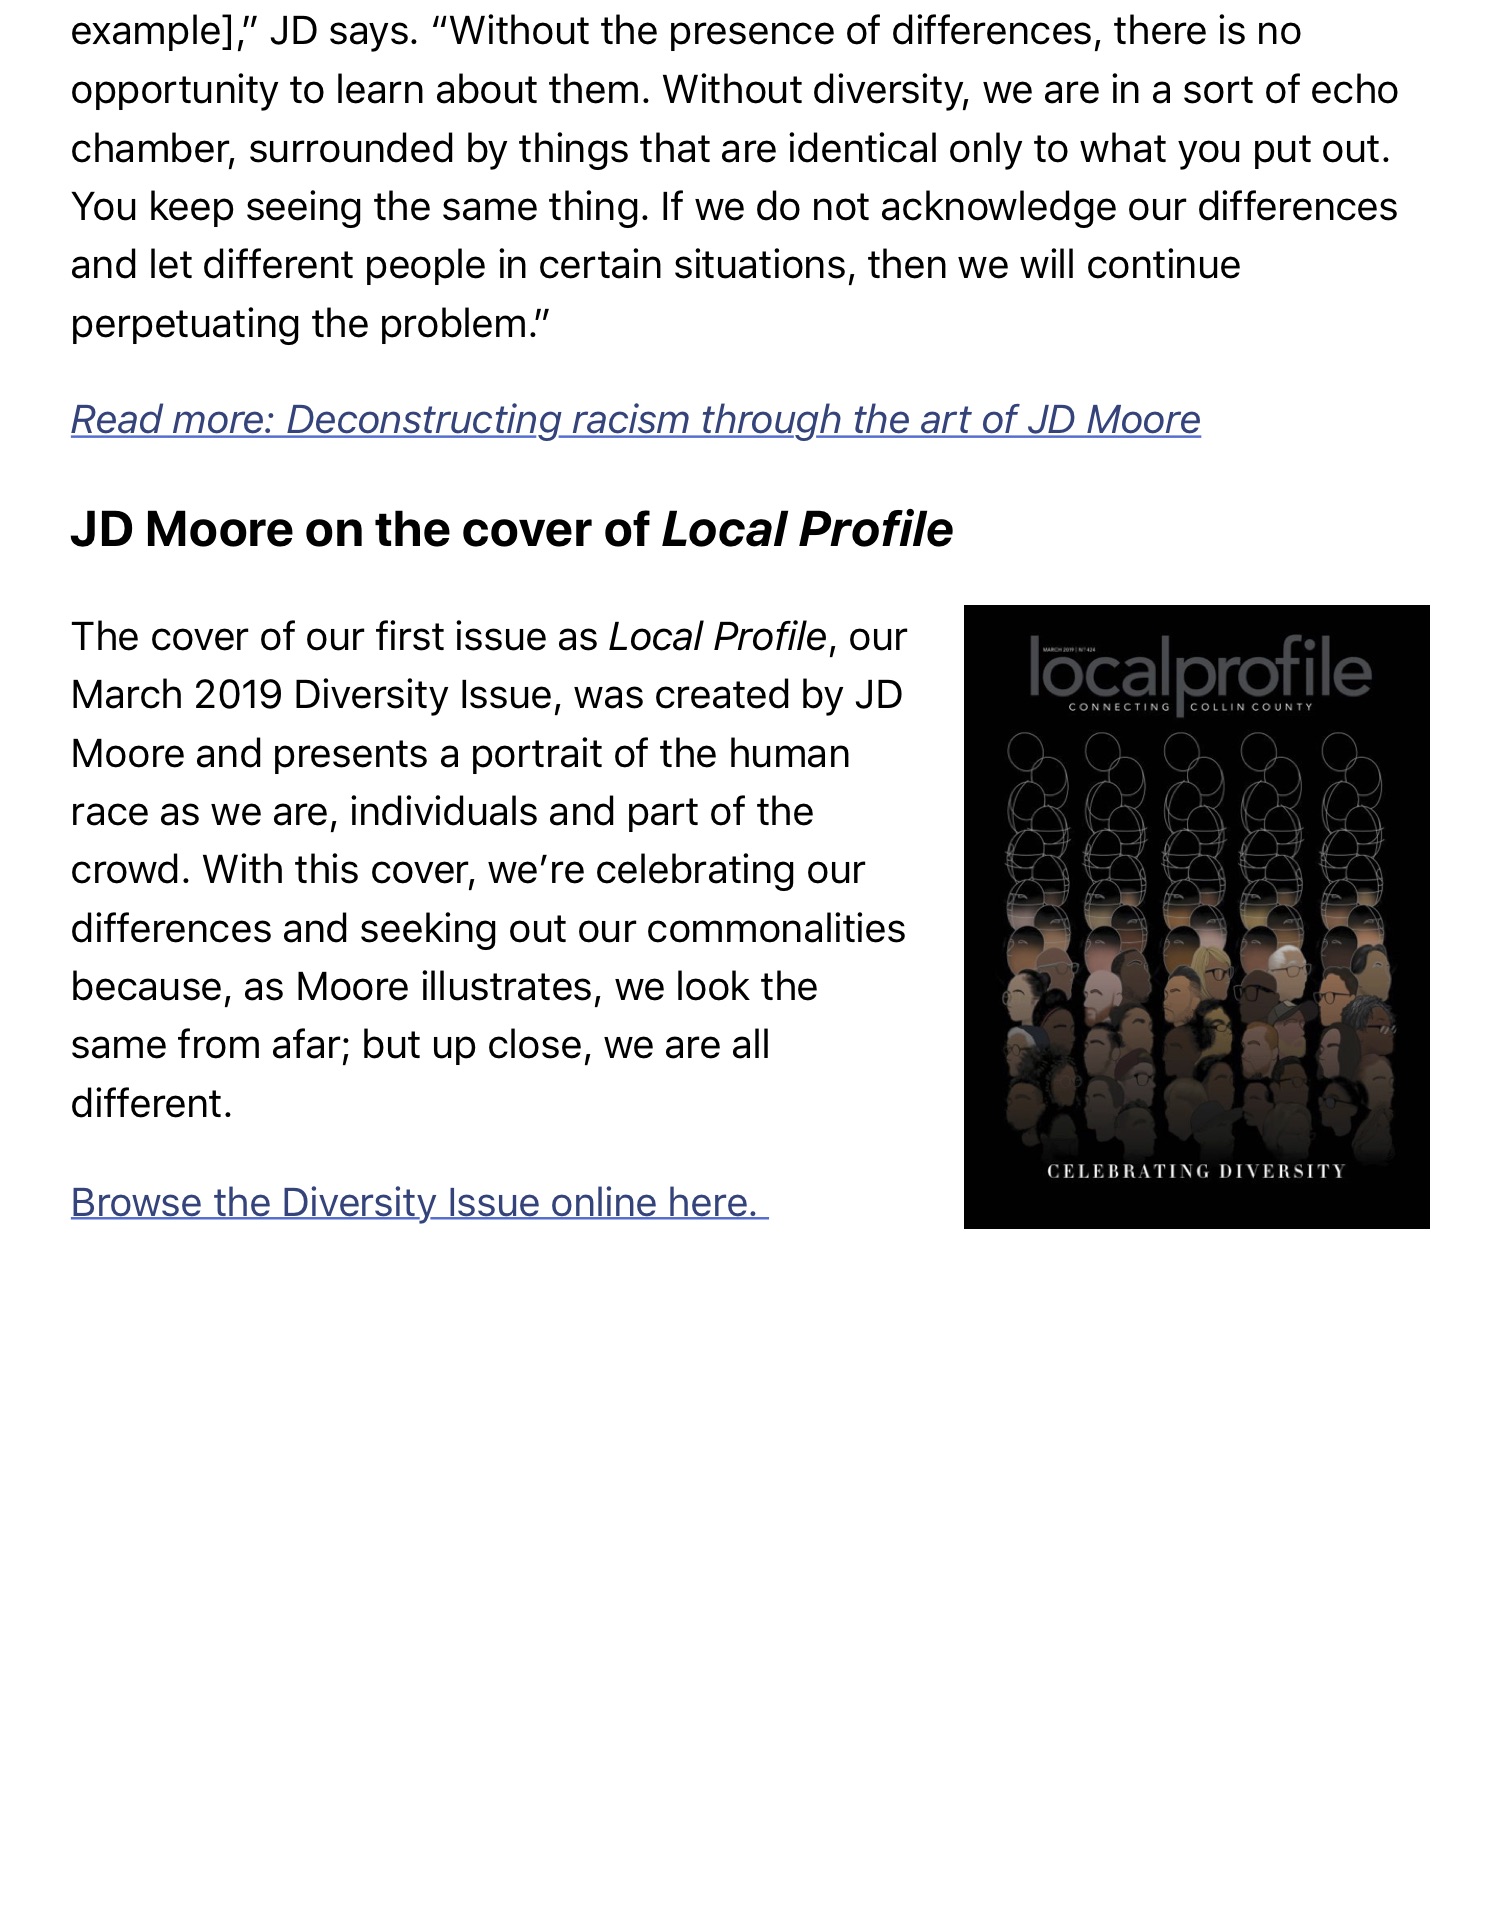 JD Moore explores diversity through art - Local Profile of Collin County3.jpg